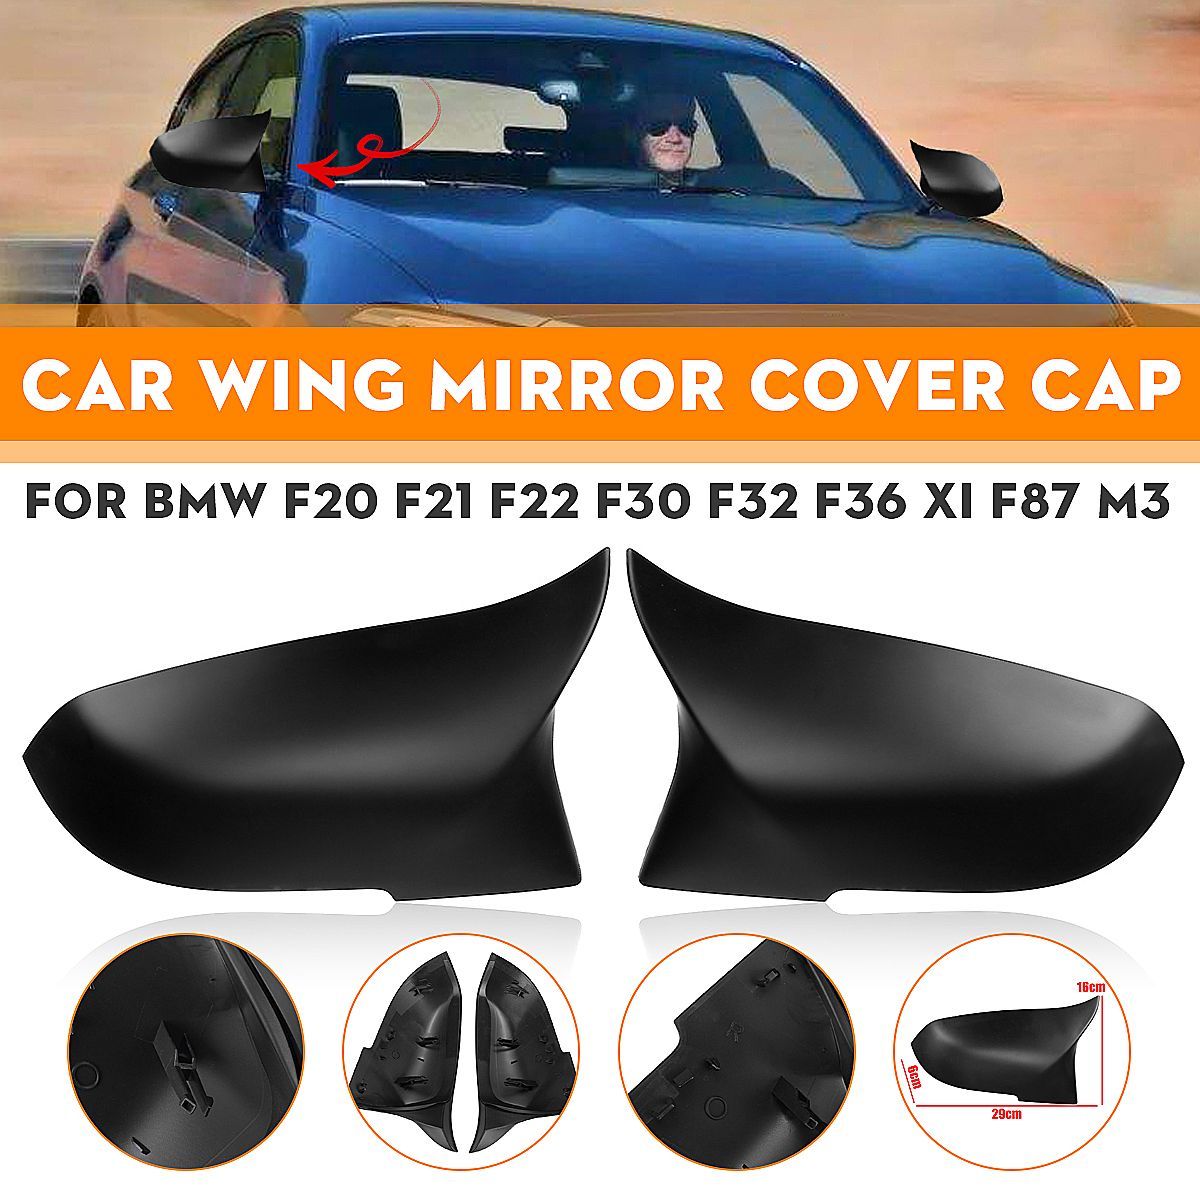 1-Pair-Matte-Black-Car-Rearview-Mirror-Cover-Cap-For-BMW-F20-F21-F22-F30-F32-F36-X1-F87-M3-1754885